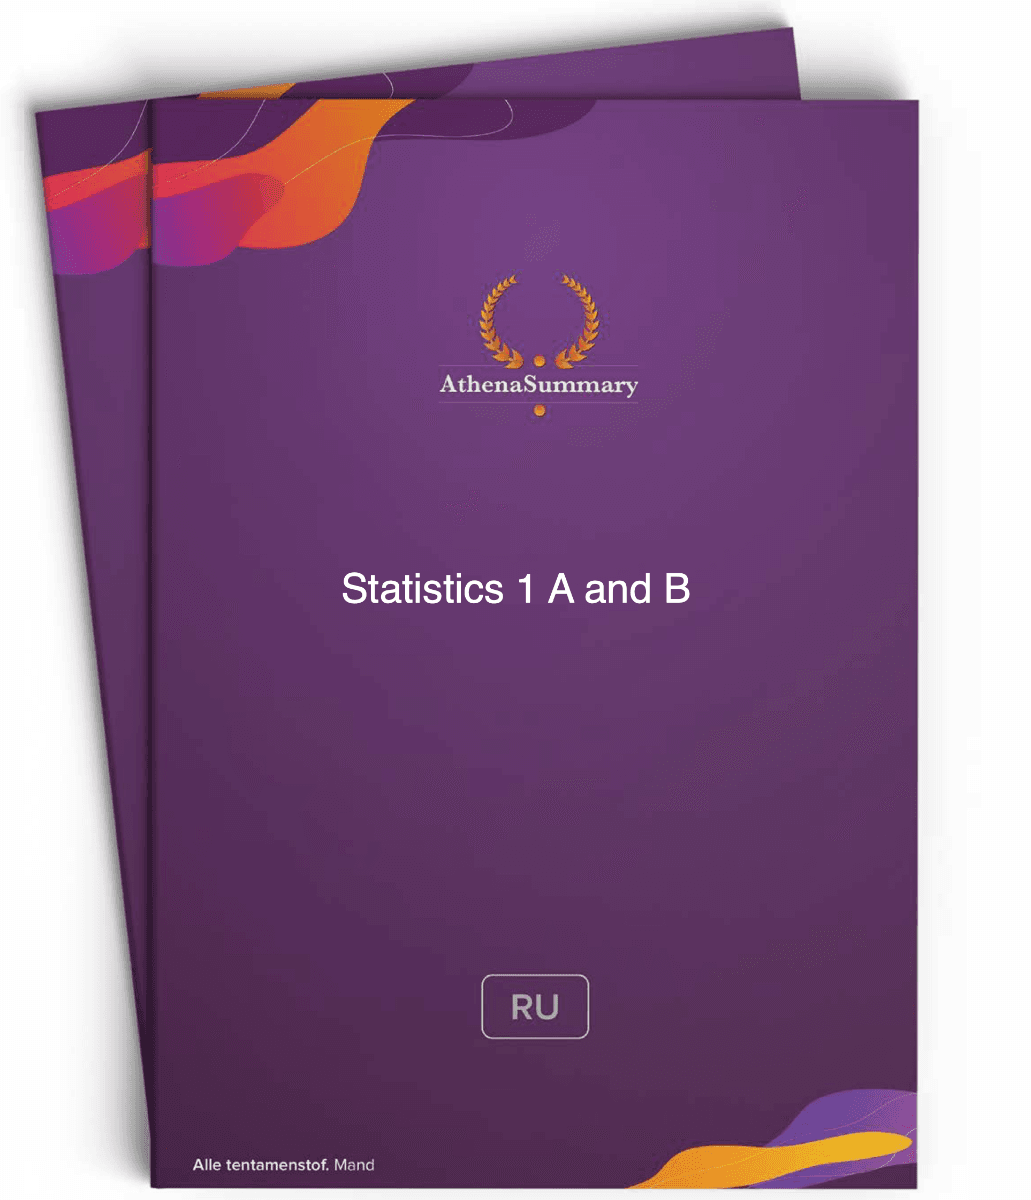 Literature Summary - Statistics 1 A and B